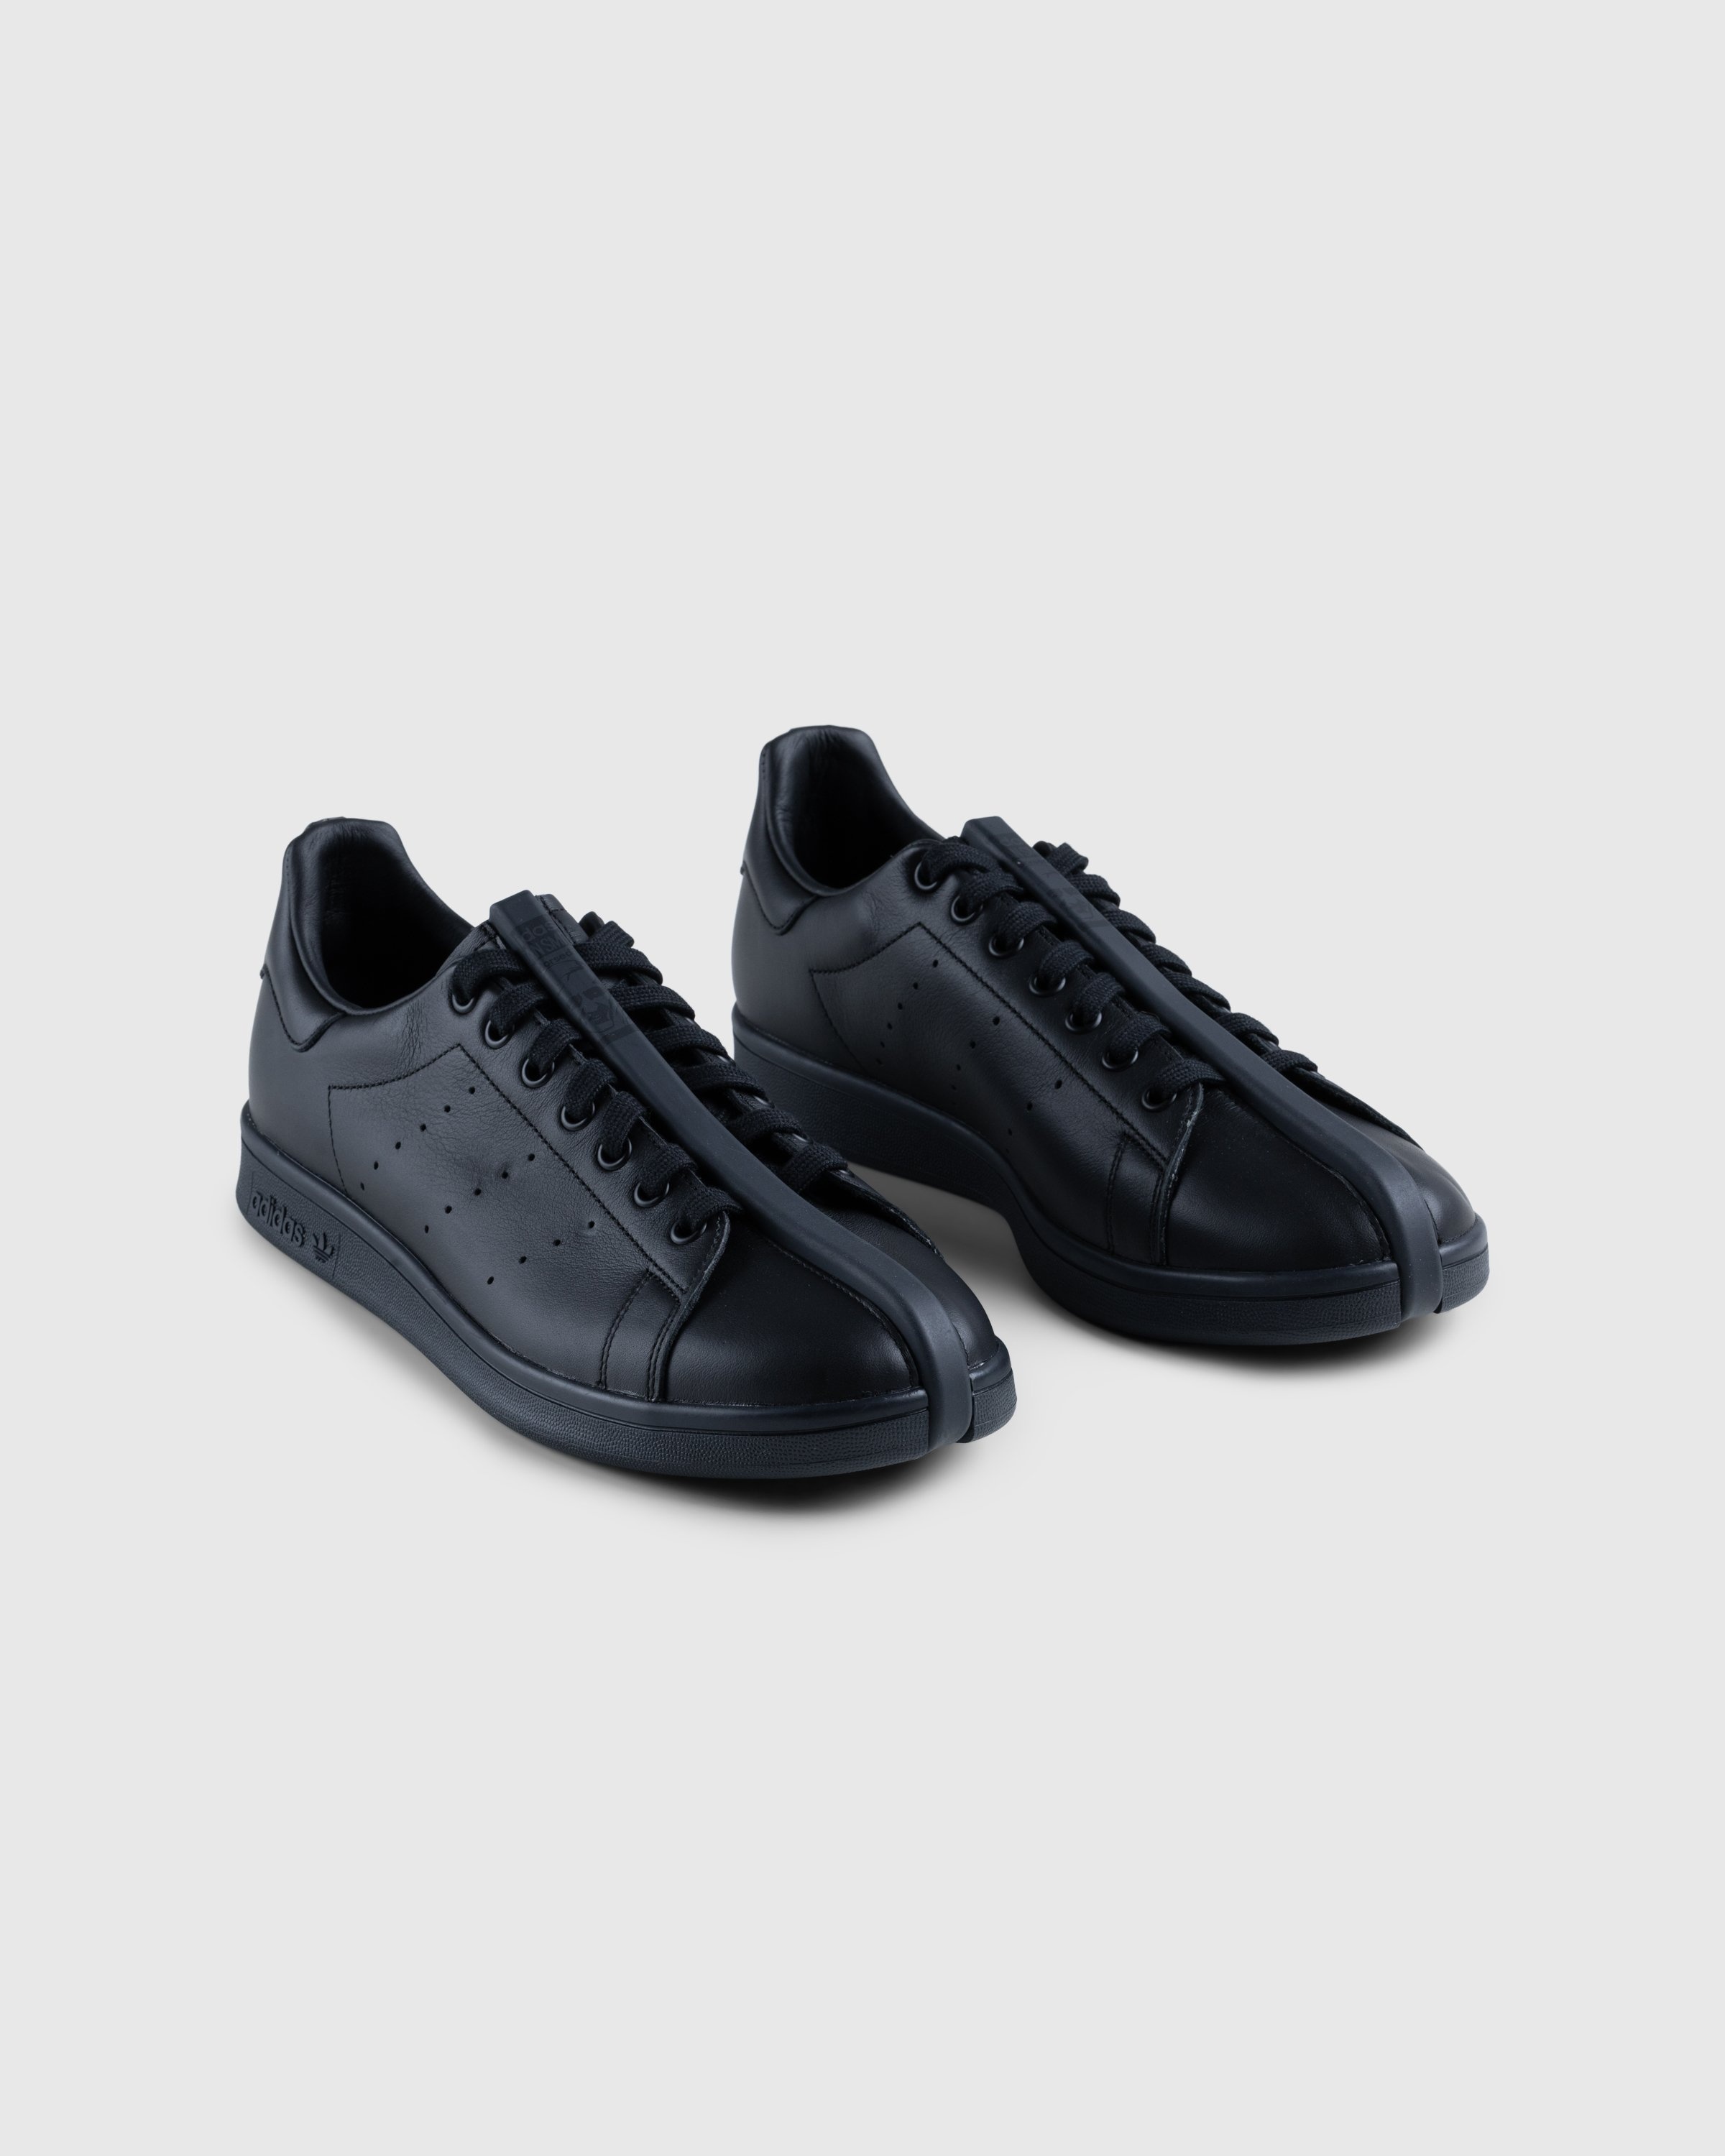 Craig Green x Adidas – CG Split Stan Smith Core Black/Granite - Sneakers - Black - Image 3